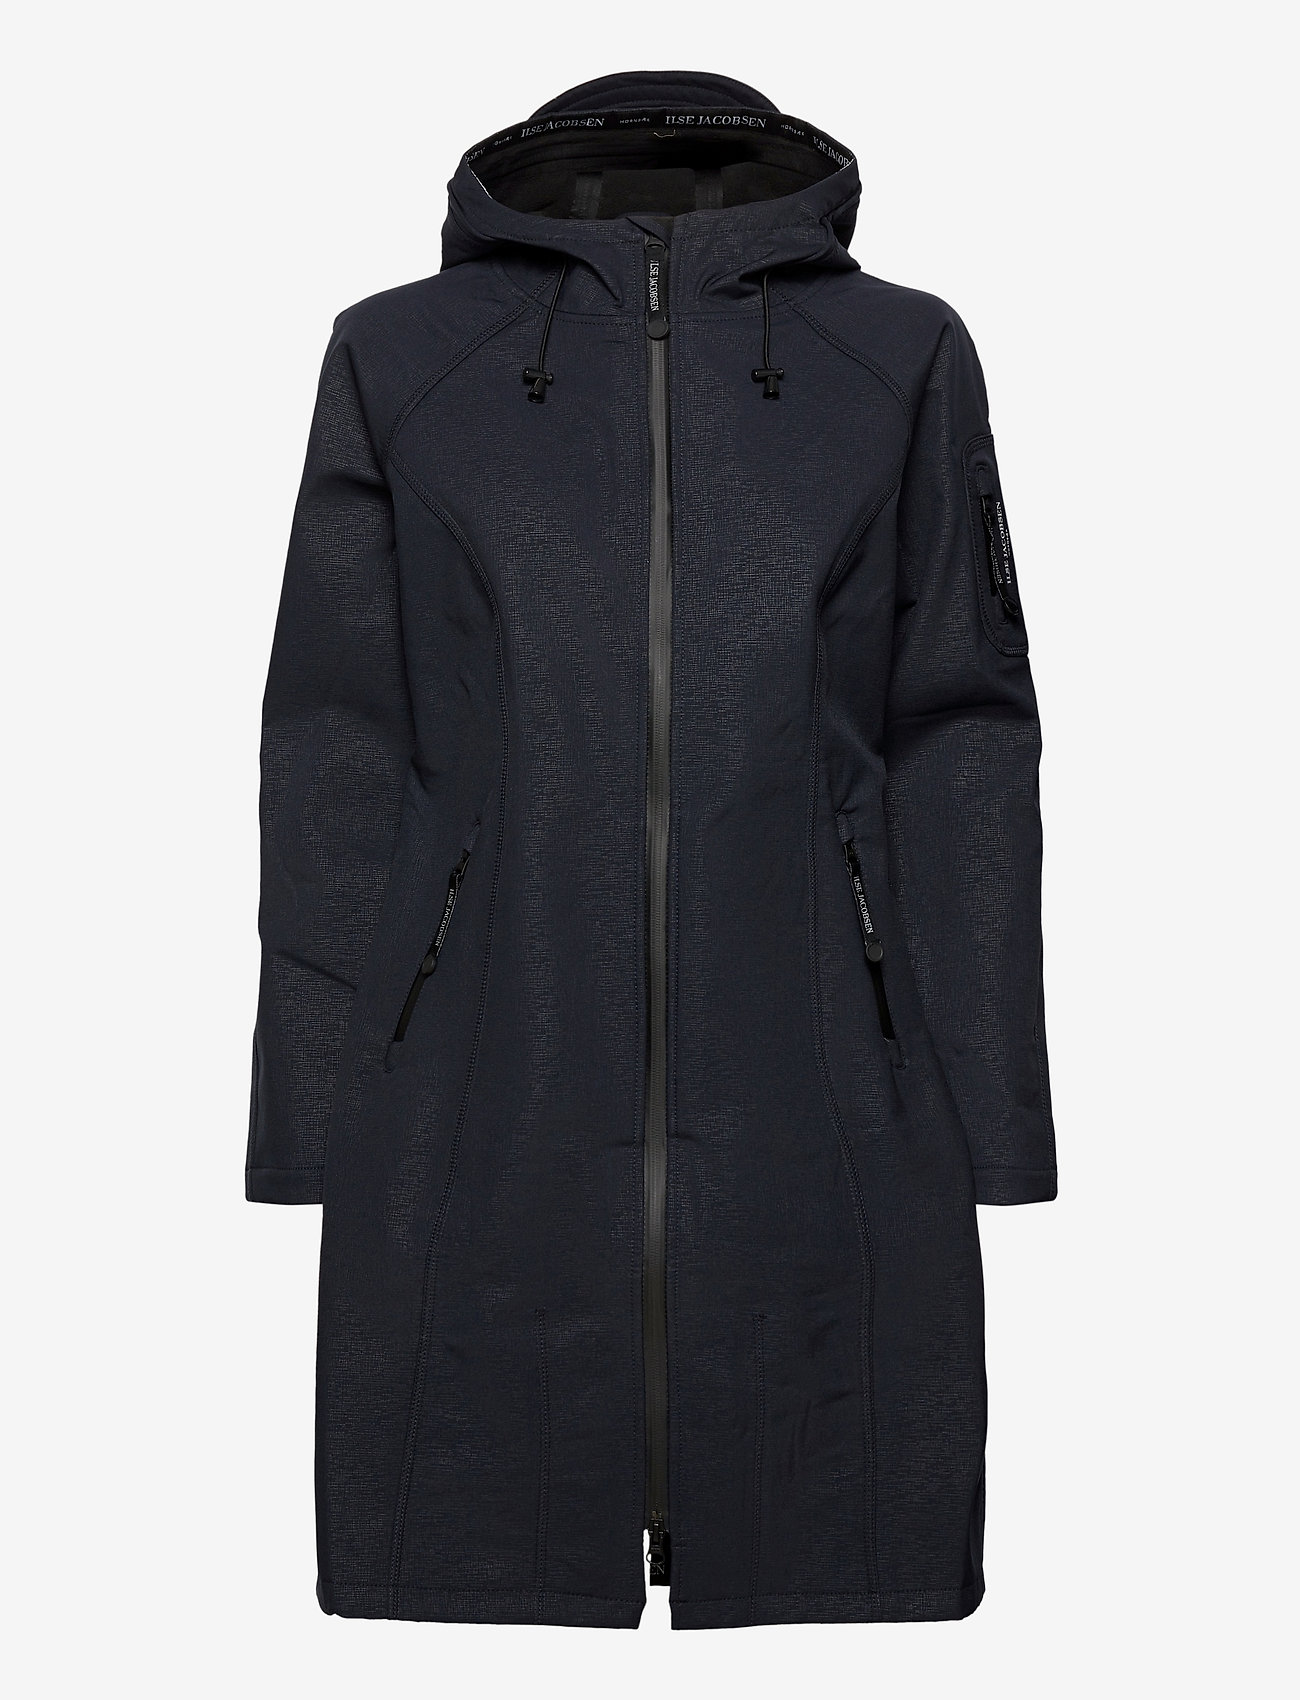 Ilse Jacobsen - Long raincoat - lietpalčiai - dark indigo - 1